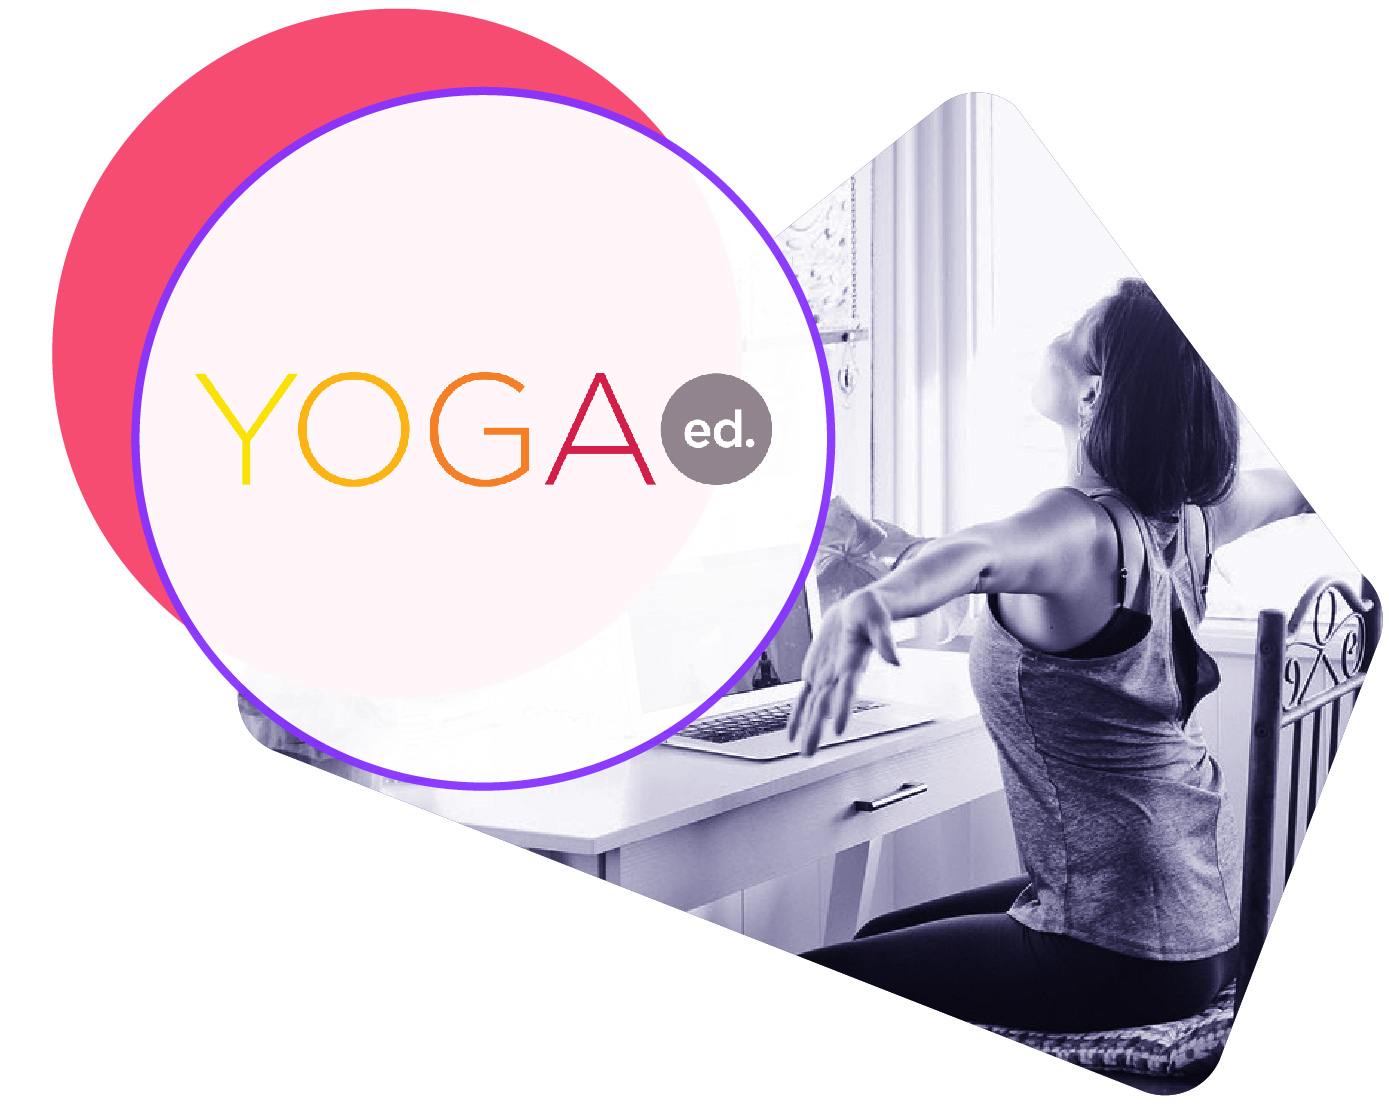 Yoga Ed logo